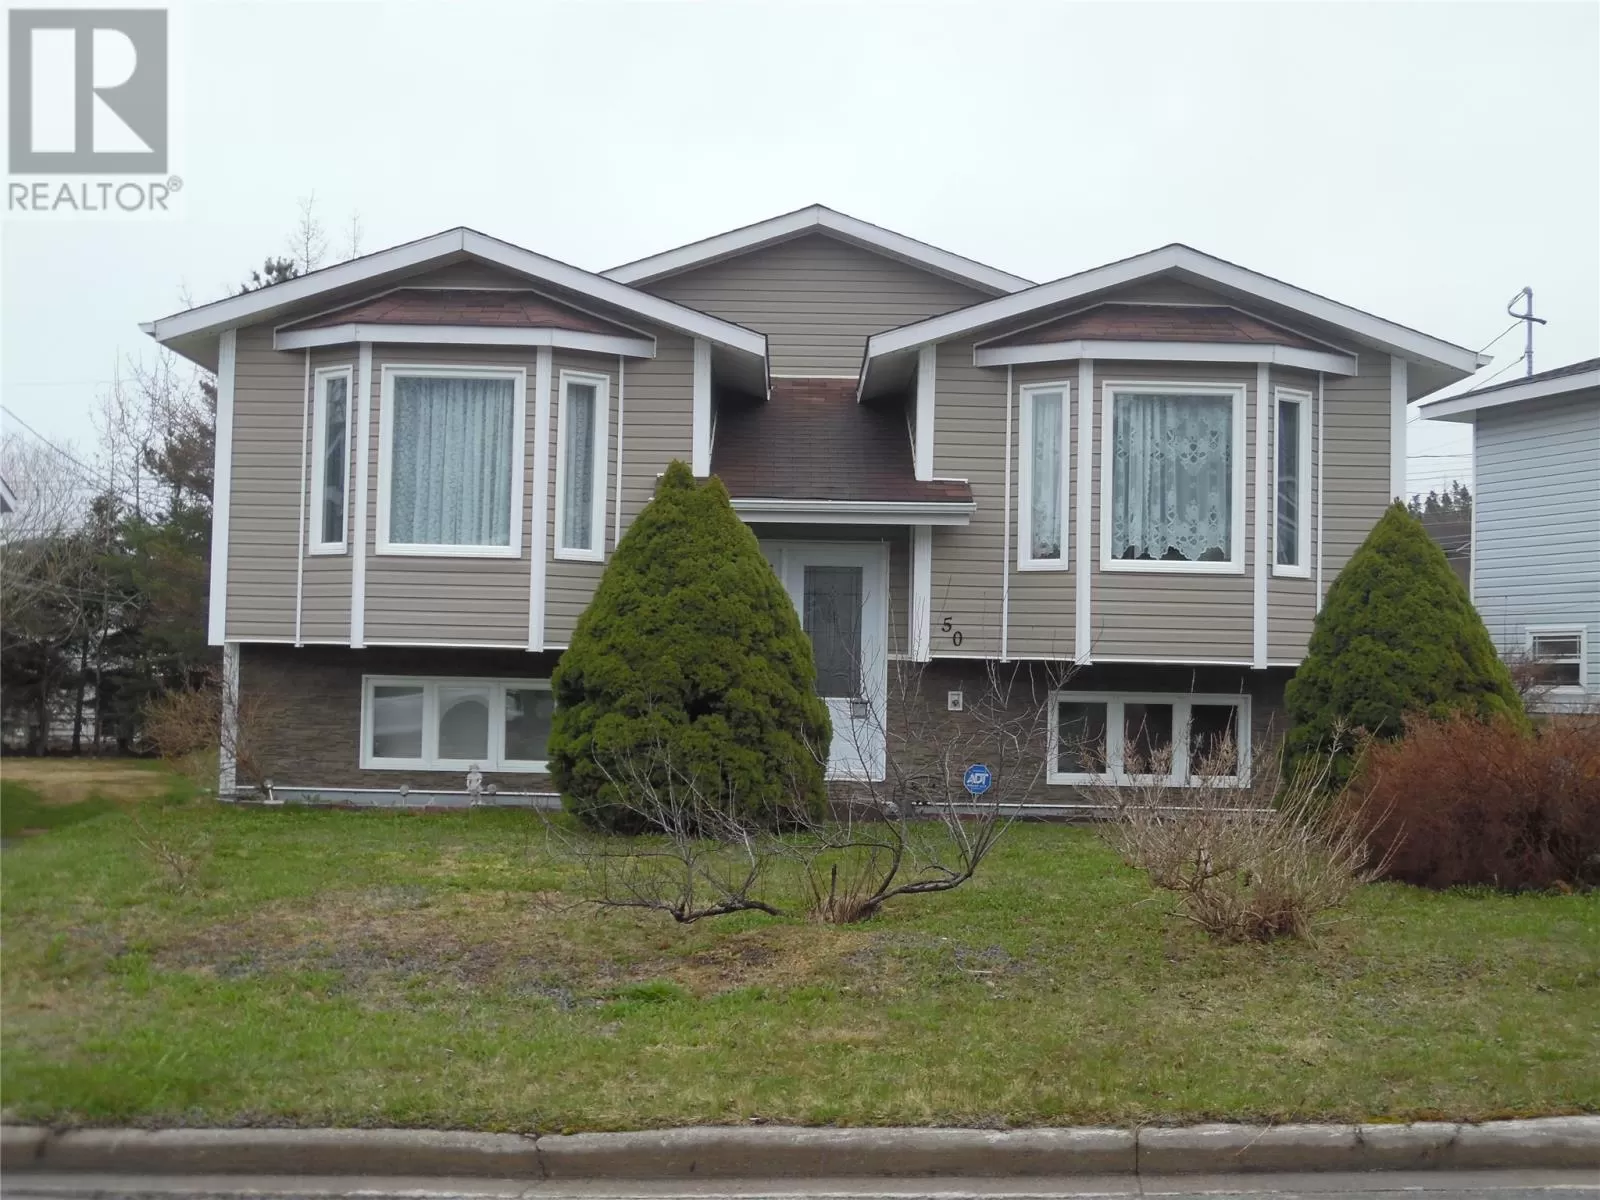 House for rent: 50 High Birchy Crescent, Clarenville, Newfoundland & Labrador A5A 1H7